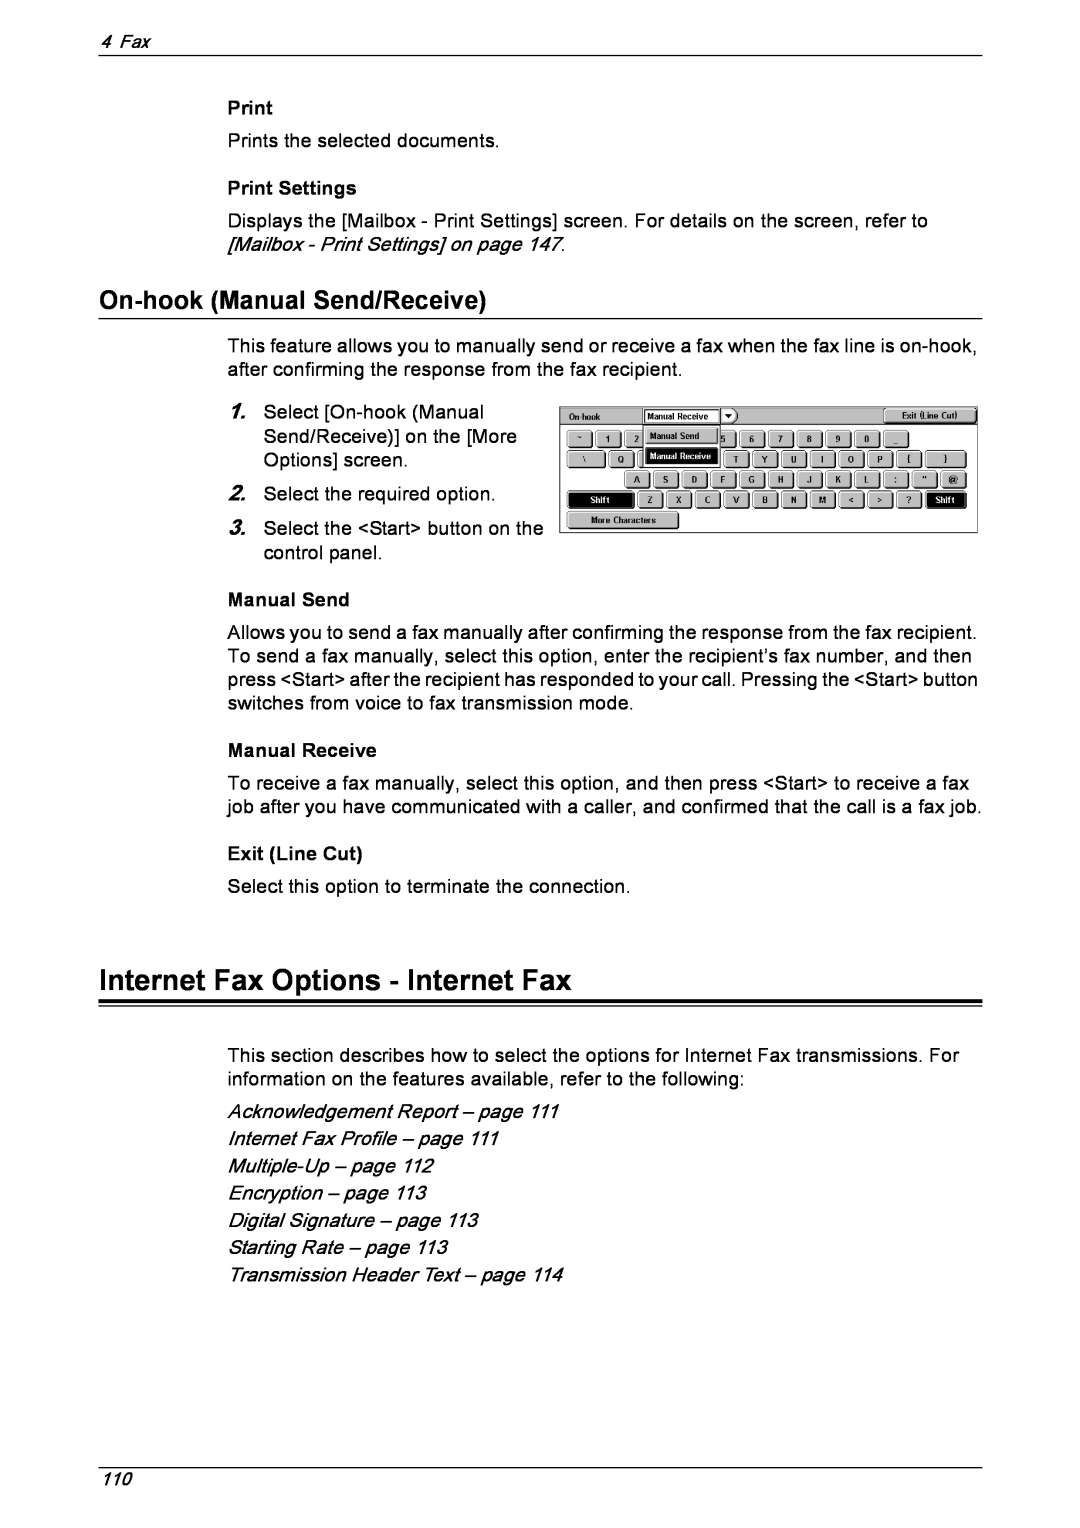 Xerox 5230 Internet Fax Options - Internet Fax, On-hookManual Send/Receive, Print Settings, Manual Receive, Exit Line Cut 